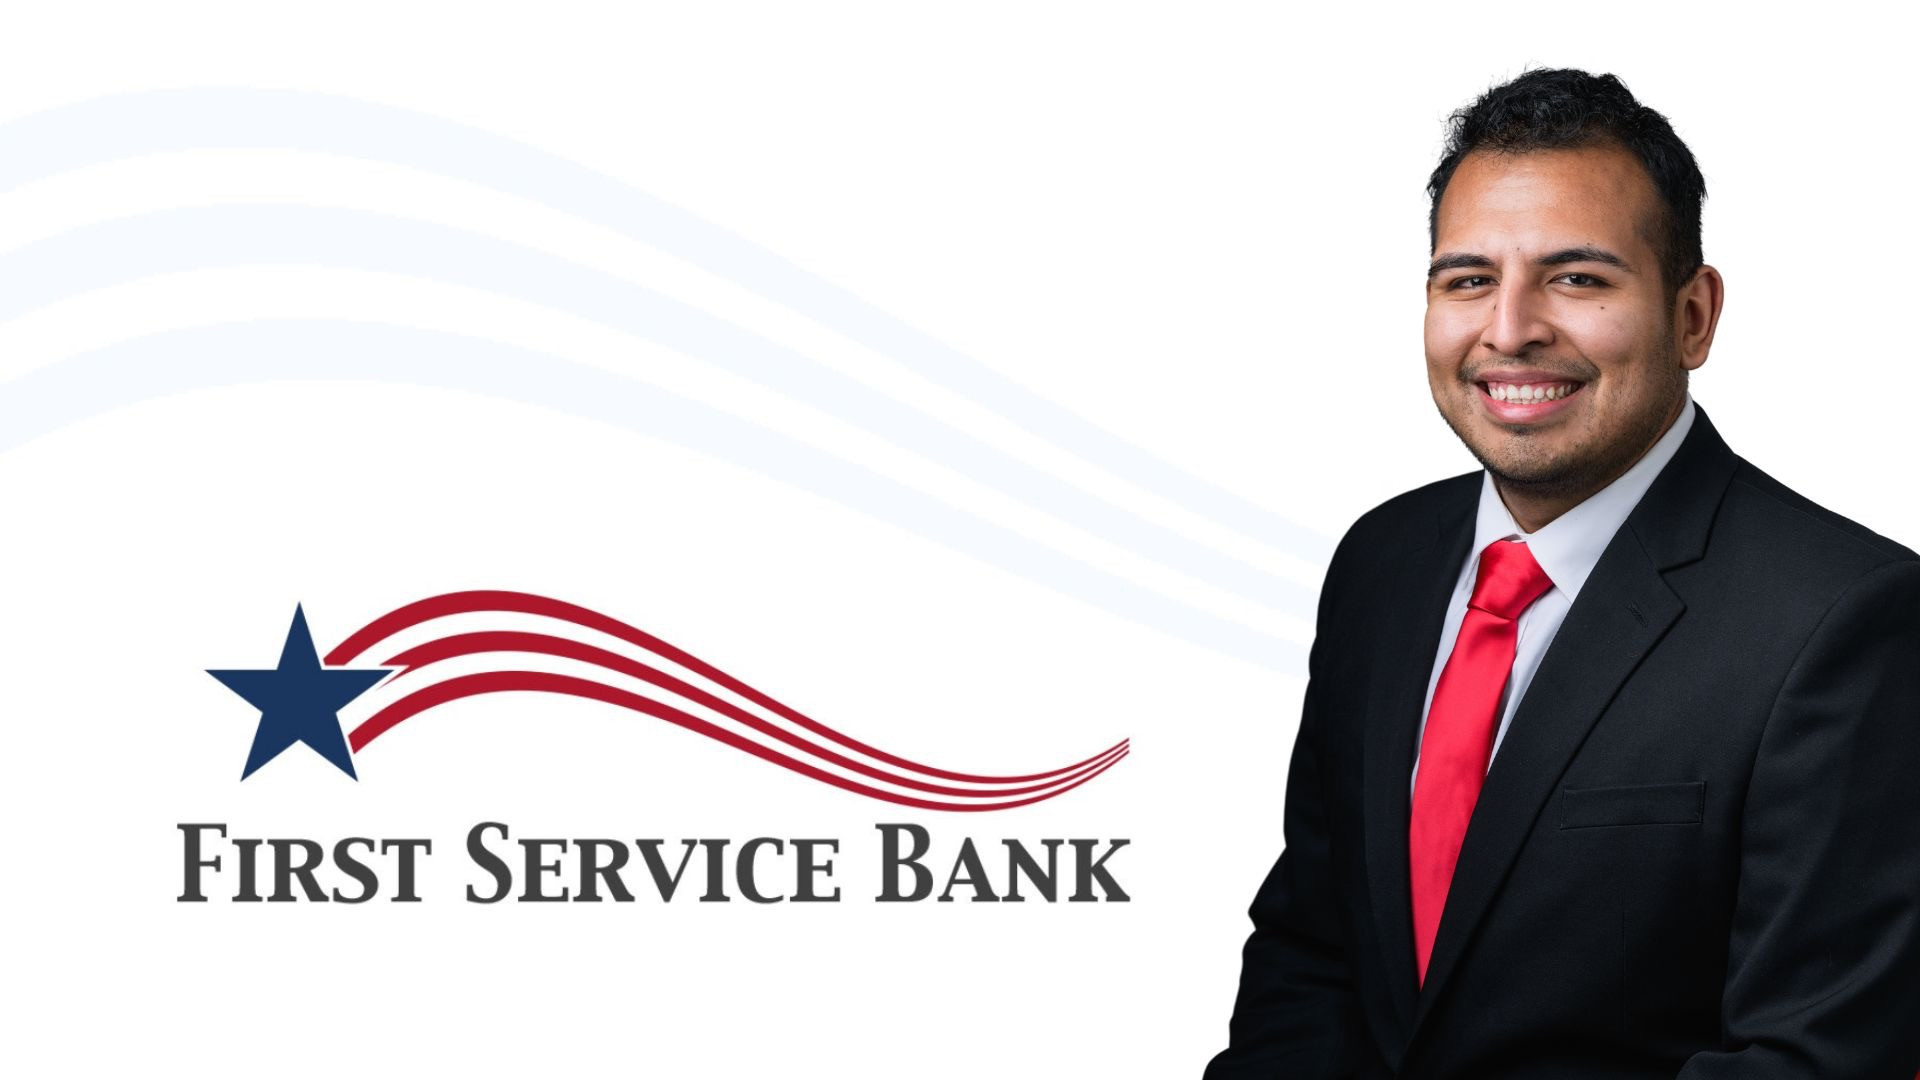 First Service Bank Welcomes Jesus Orellana to Strengthen BSA Department